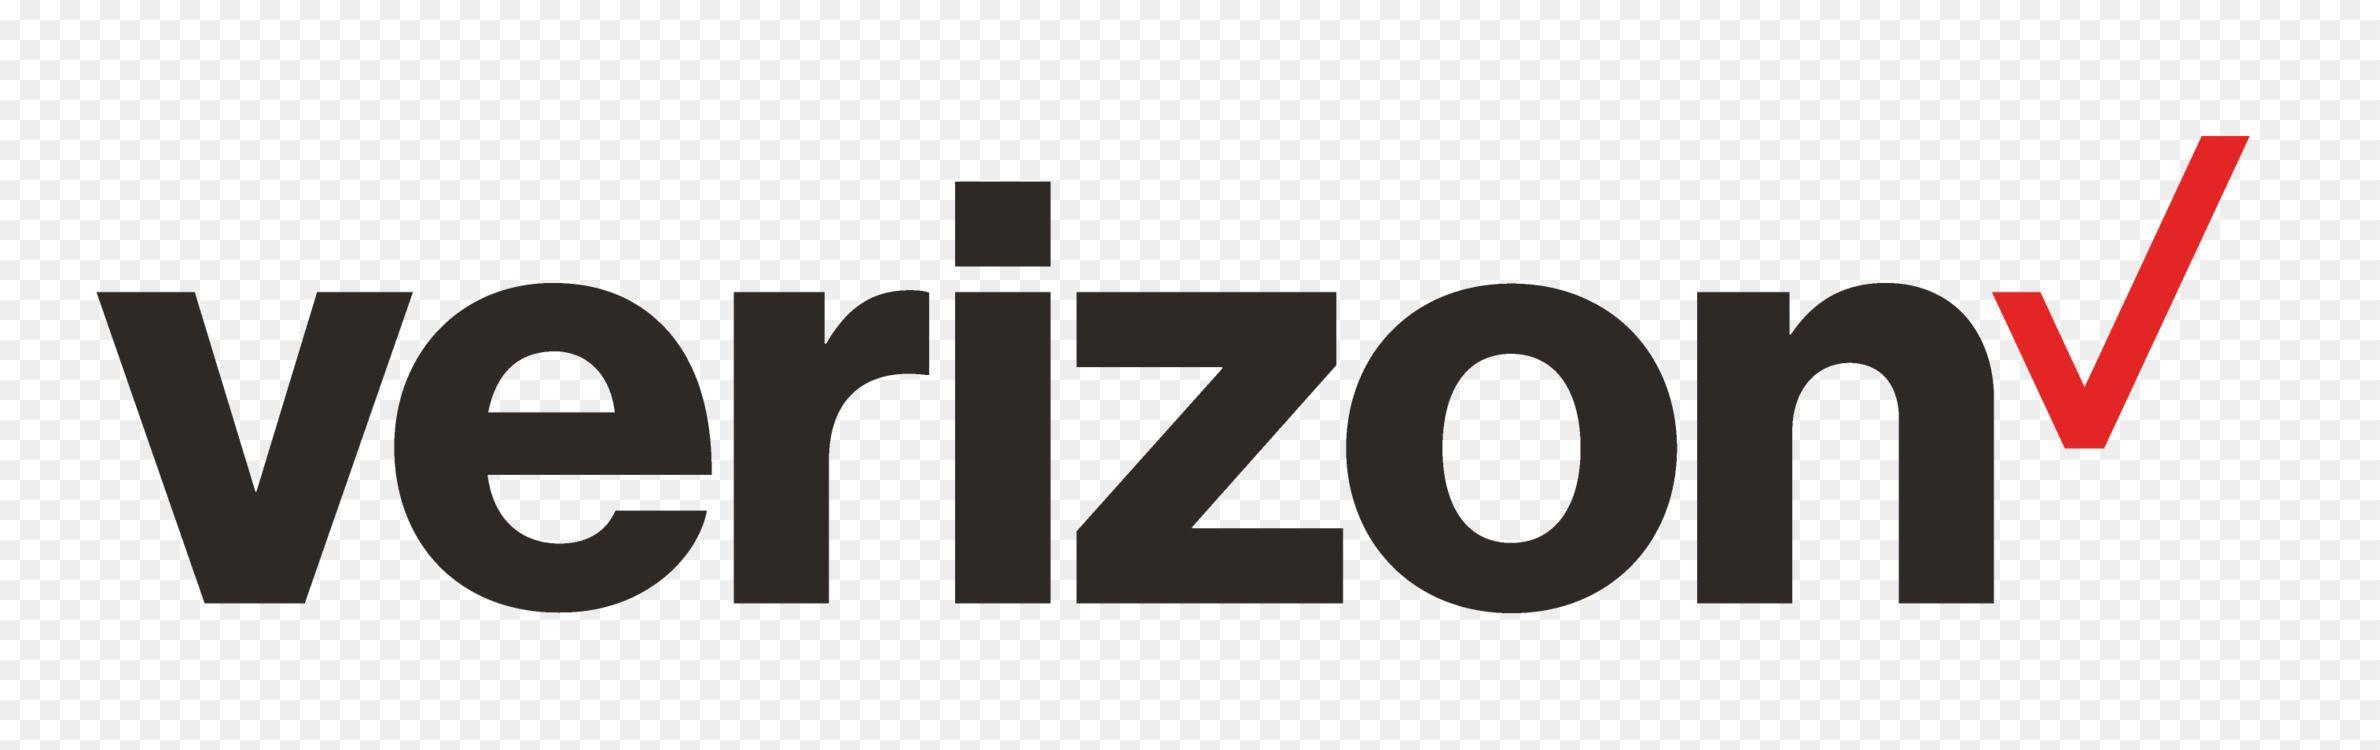 Verizon Wireless Logo - Verizon Wireless Store Mobile Phones 5G Free PNG Image